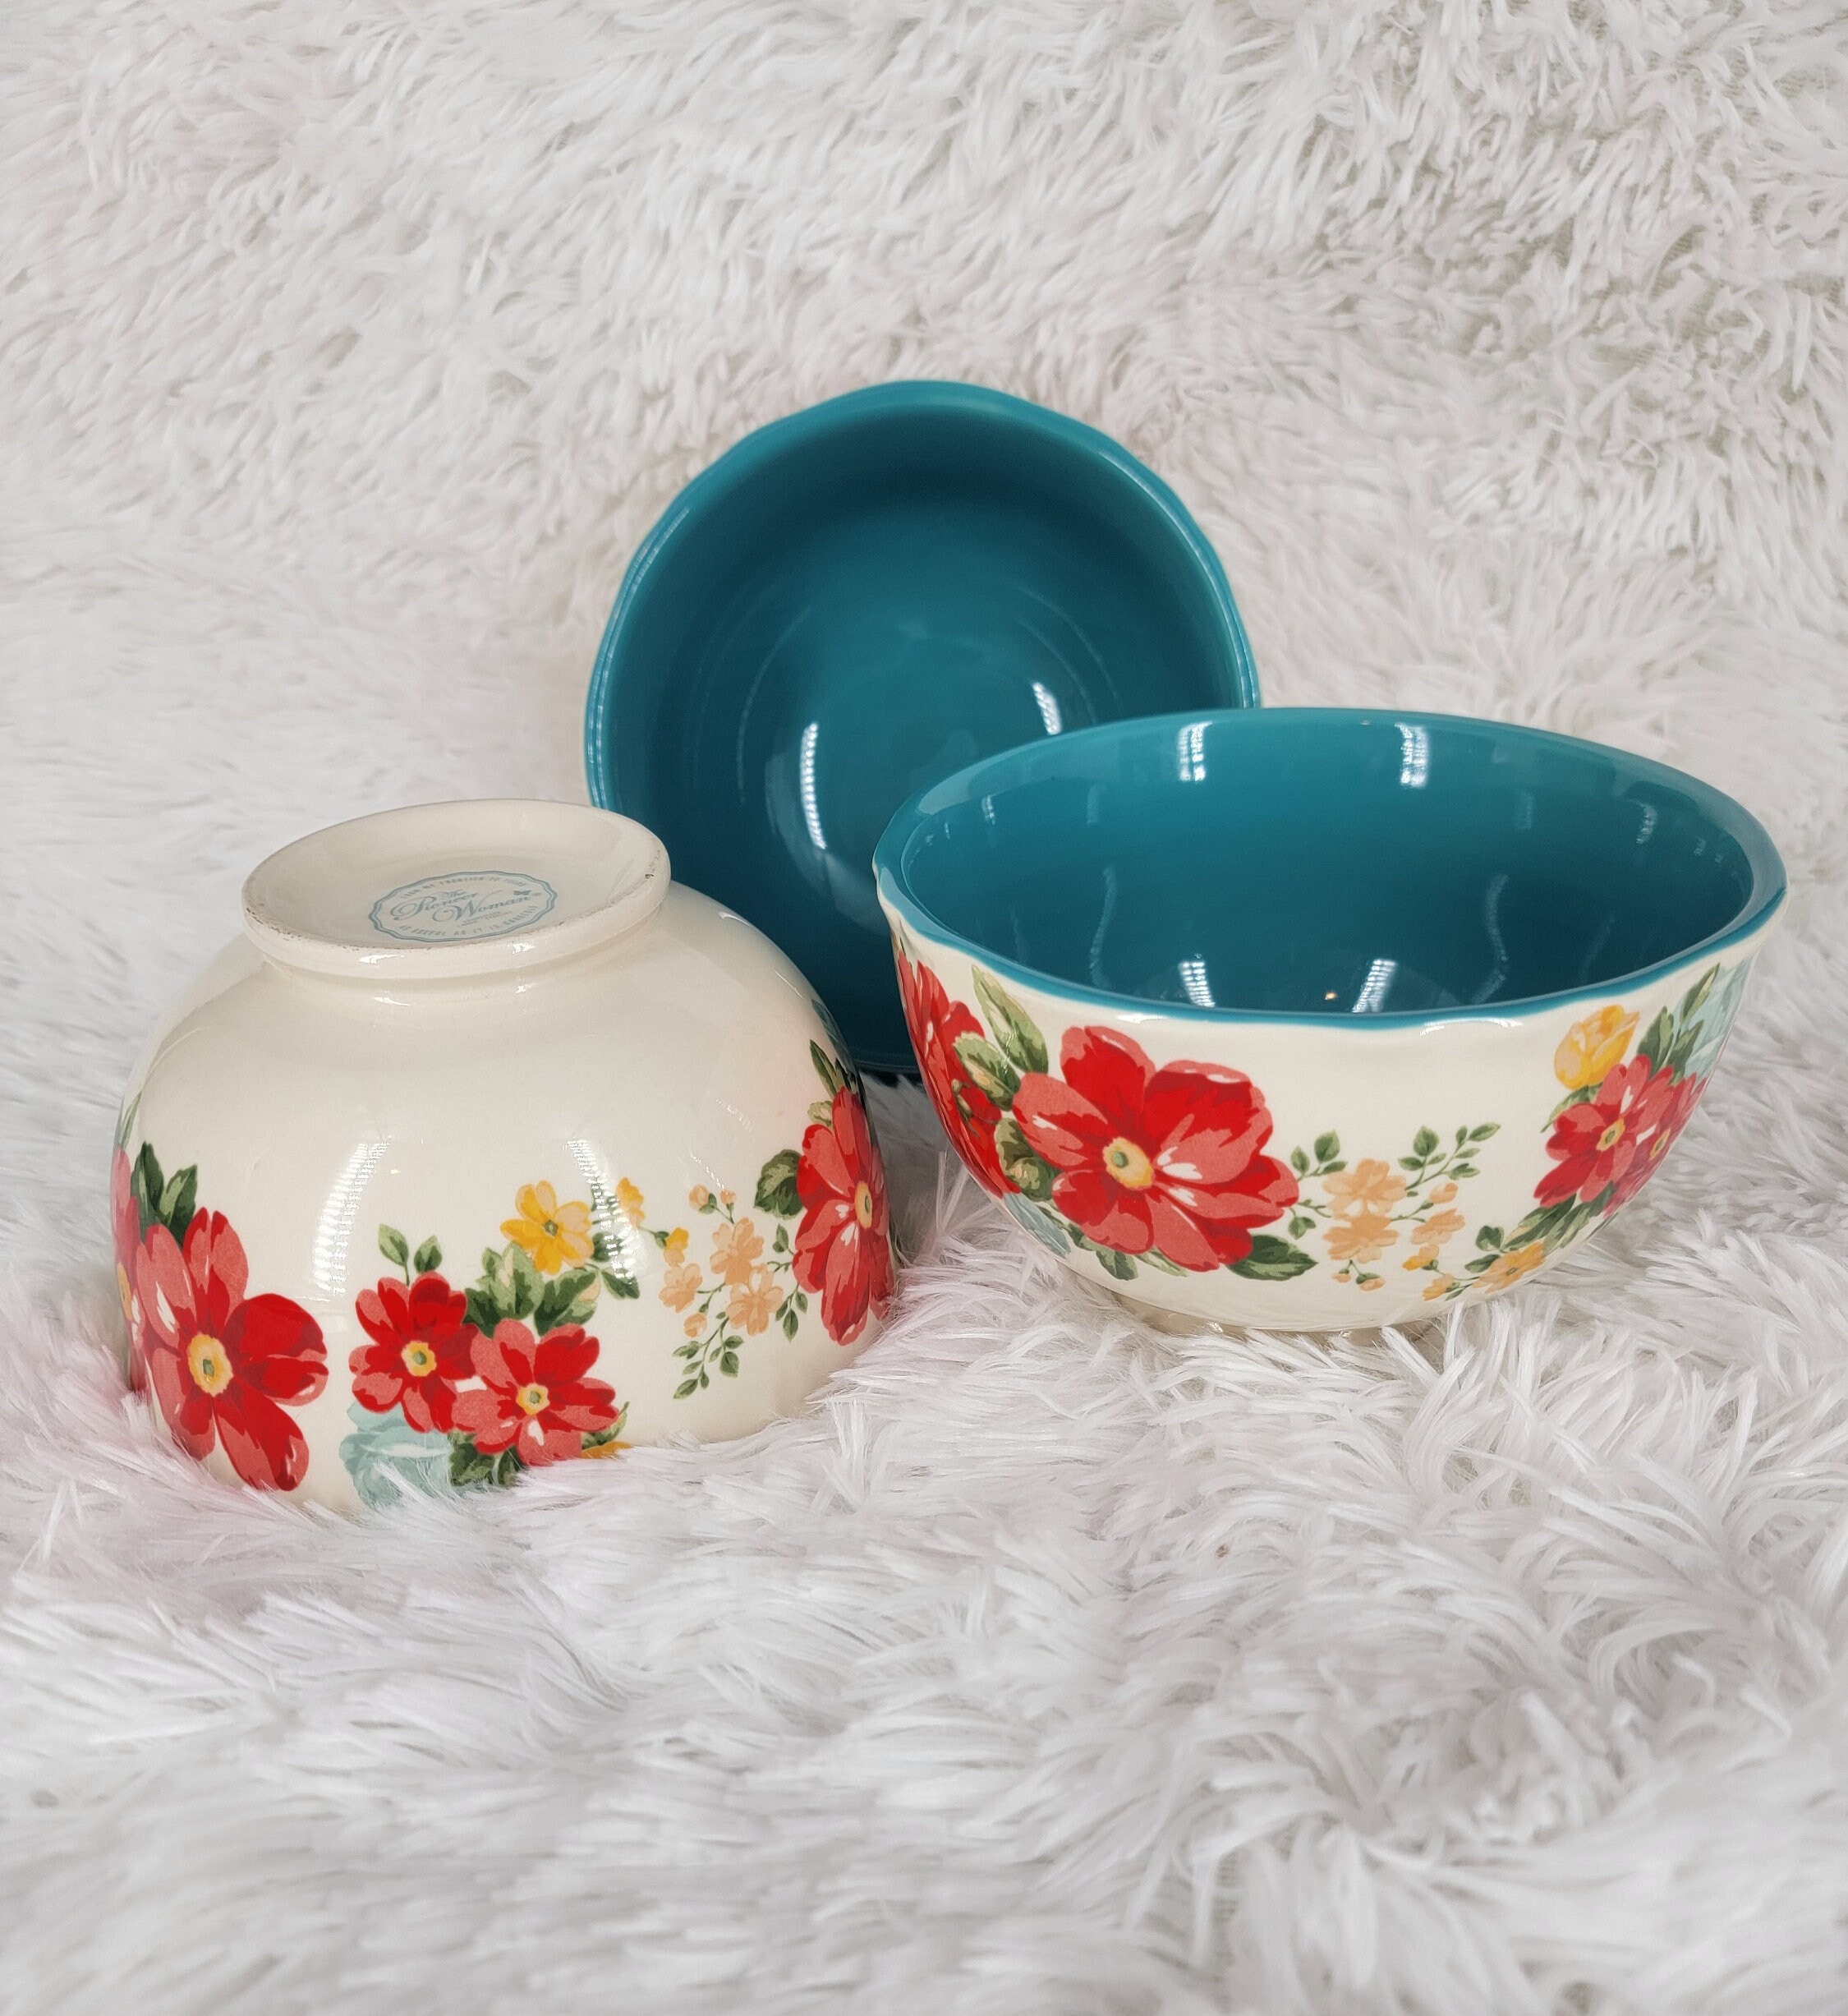 The Pioneer Woman Food Storage Bowls 8 Piece Set Sweet Rose Print in Blue